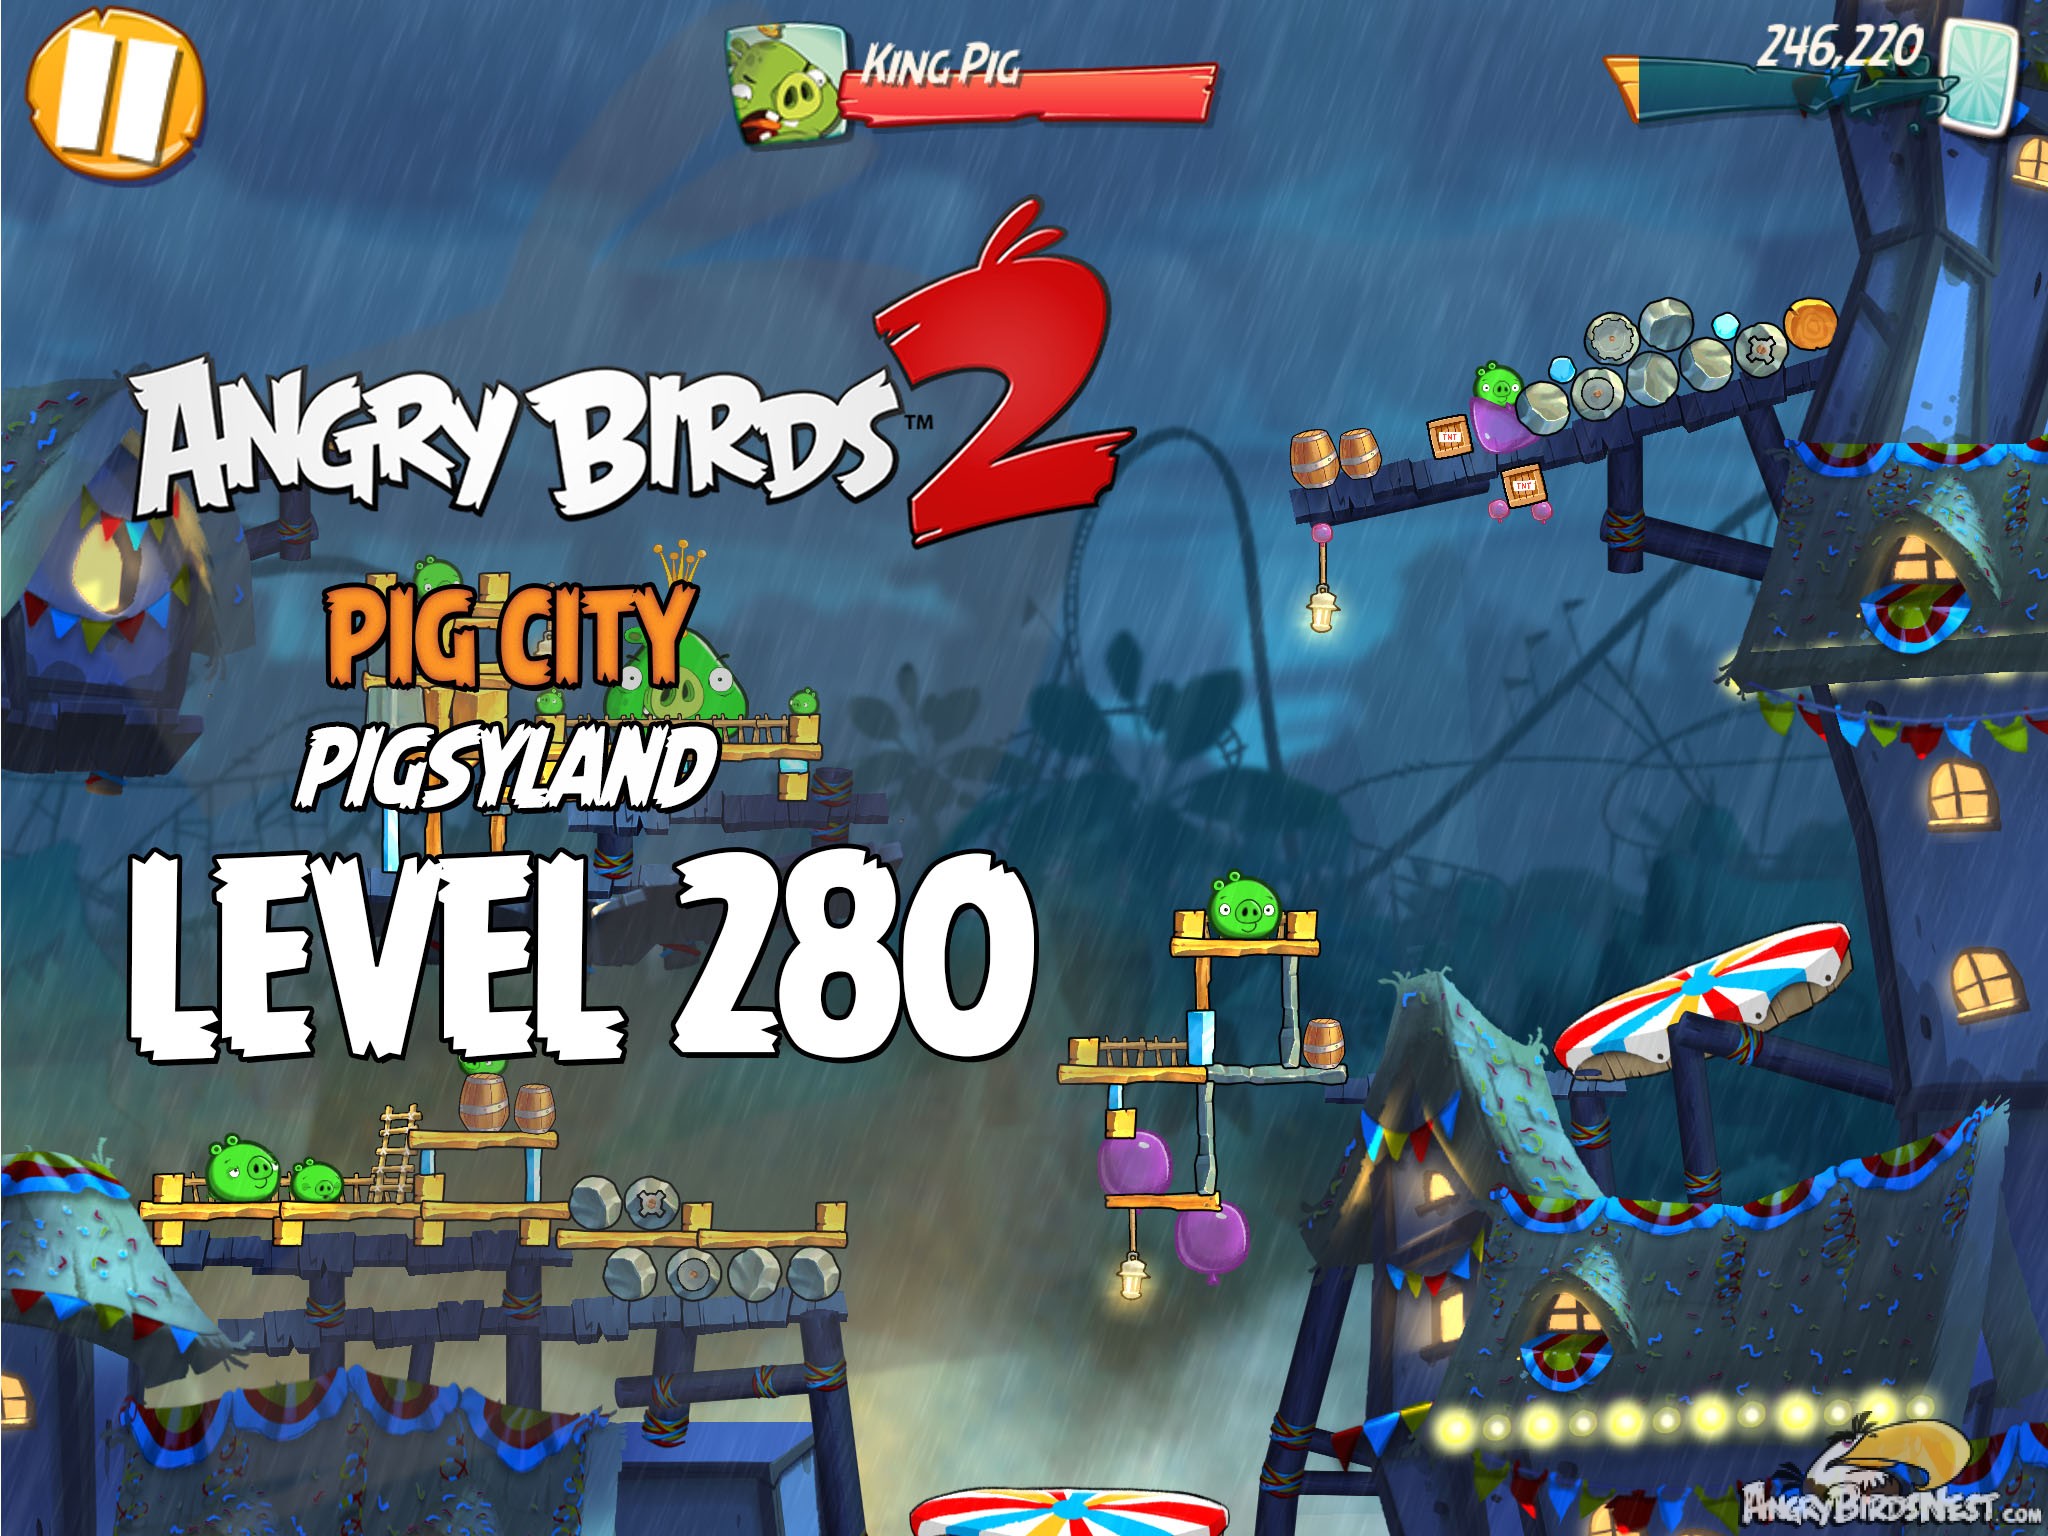 Angry Birds 2 Pig City Pigsyland Level 280